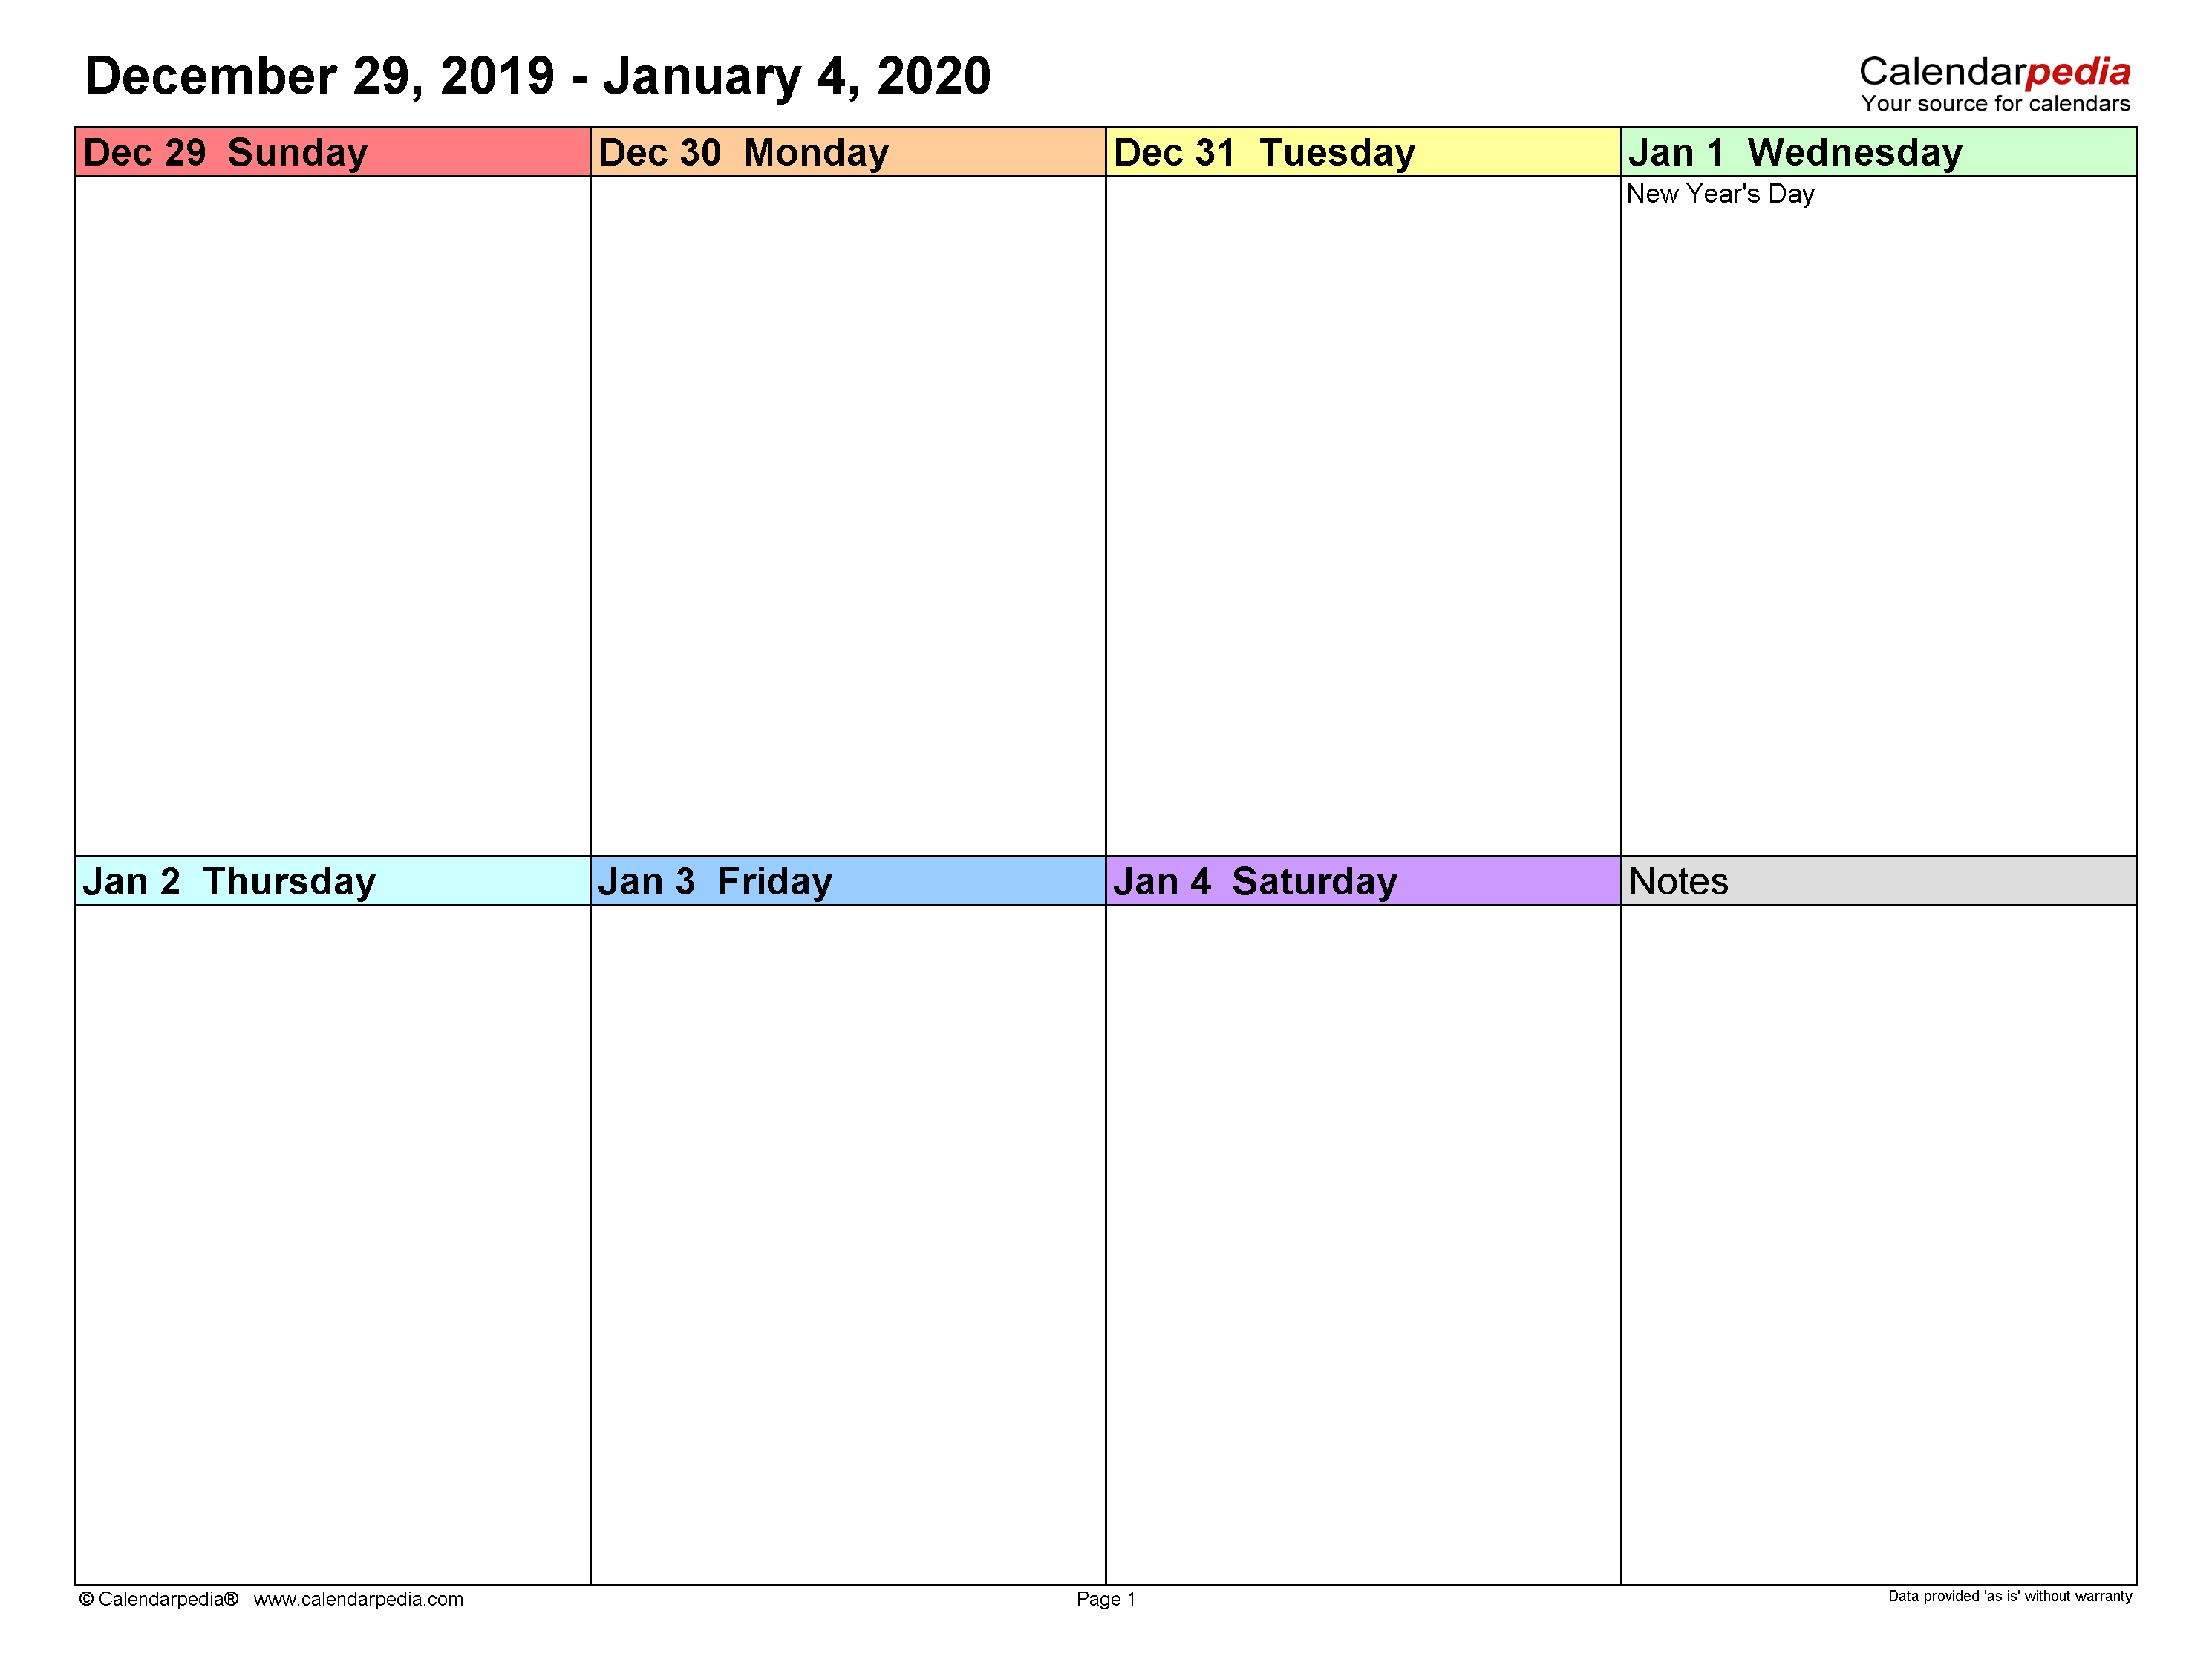 Weekly Calendars 2020 For Word - 12 Free Printable Templates  Weekly Calendar 2020